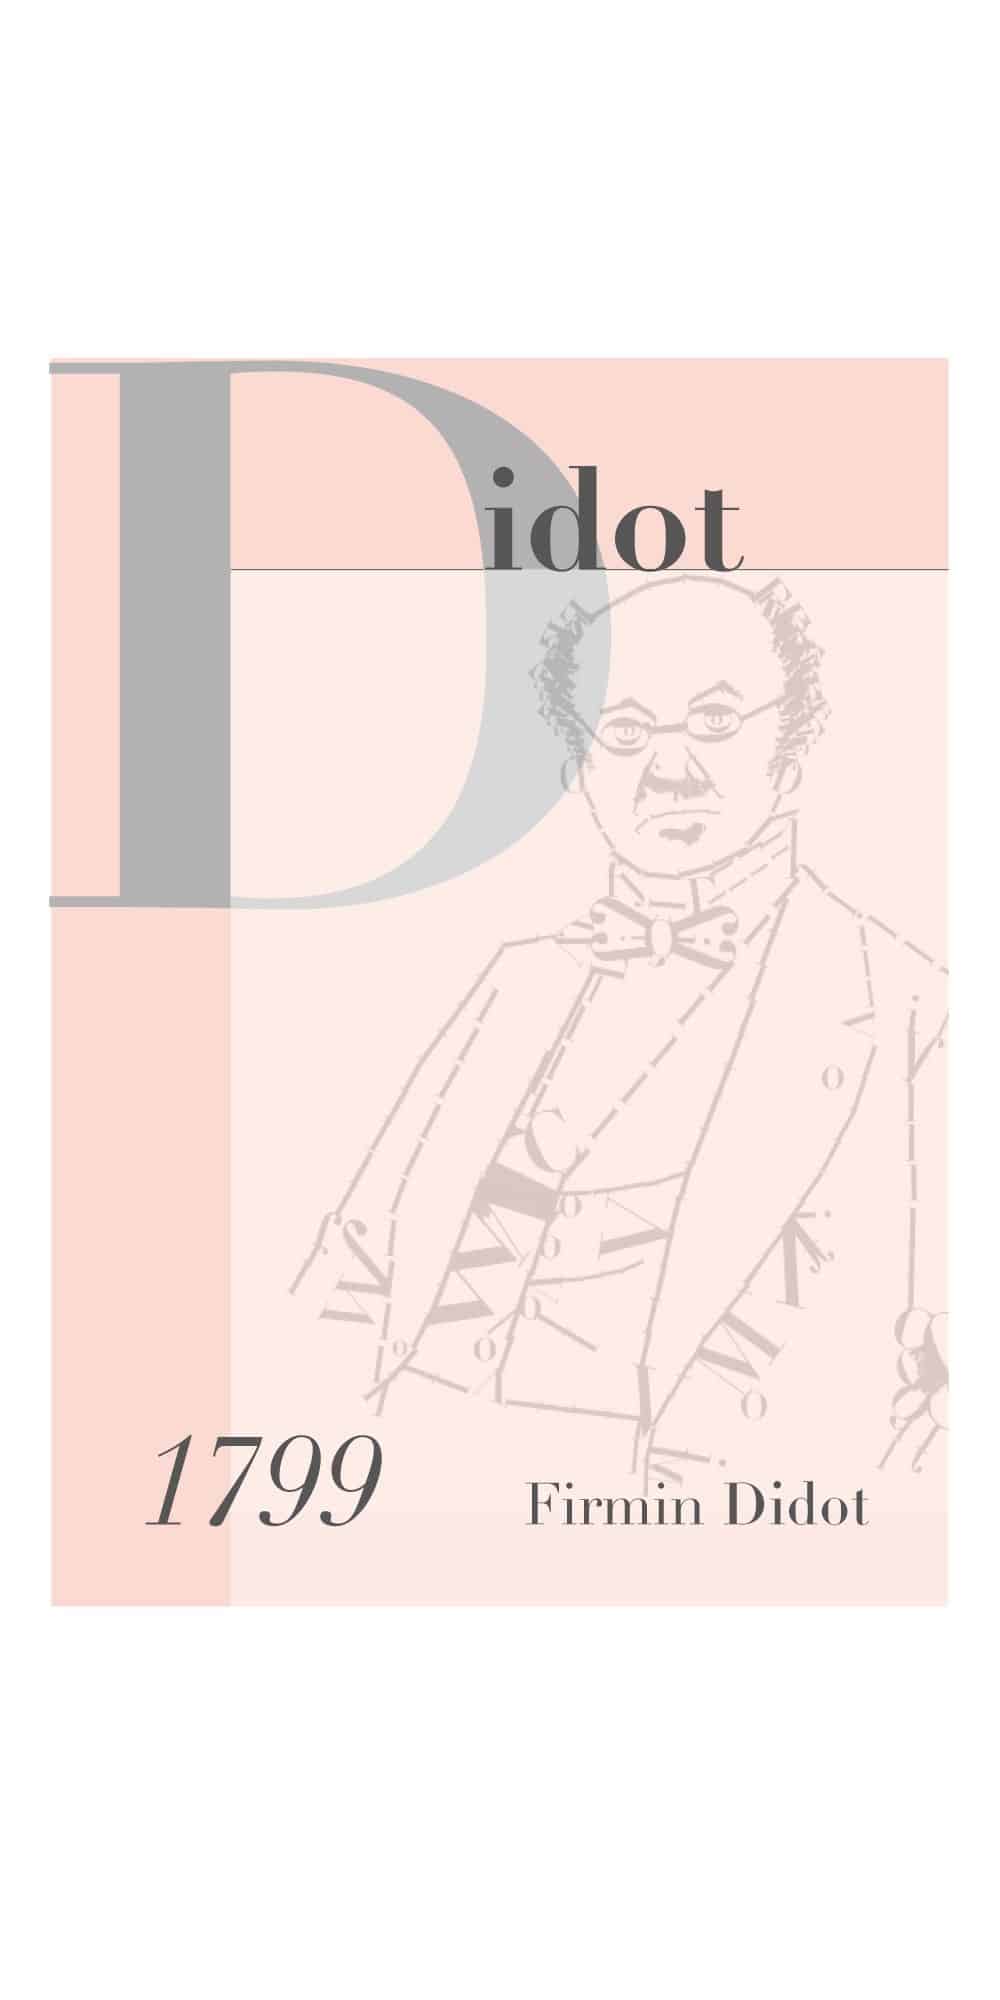 Download Didot [1799 - Firmin Didot] font (typeface)